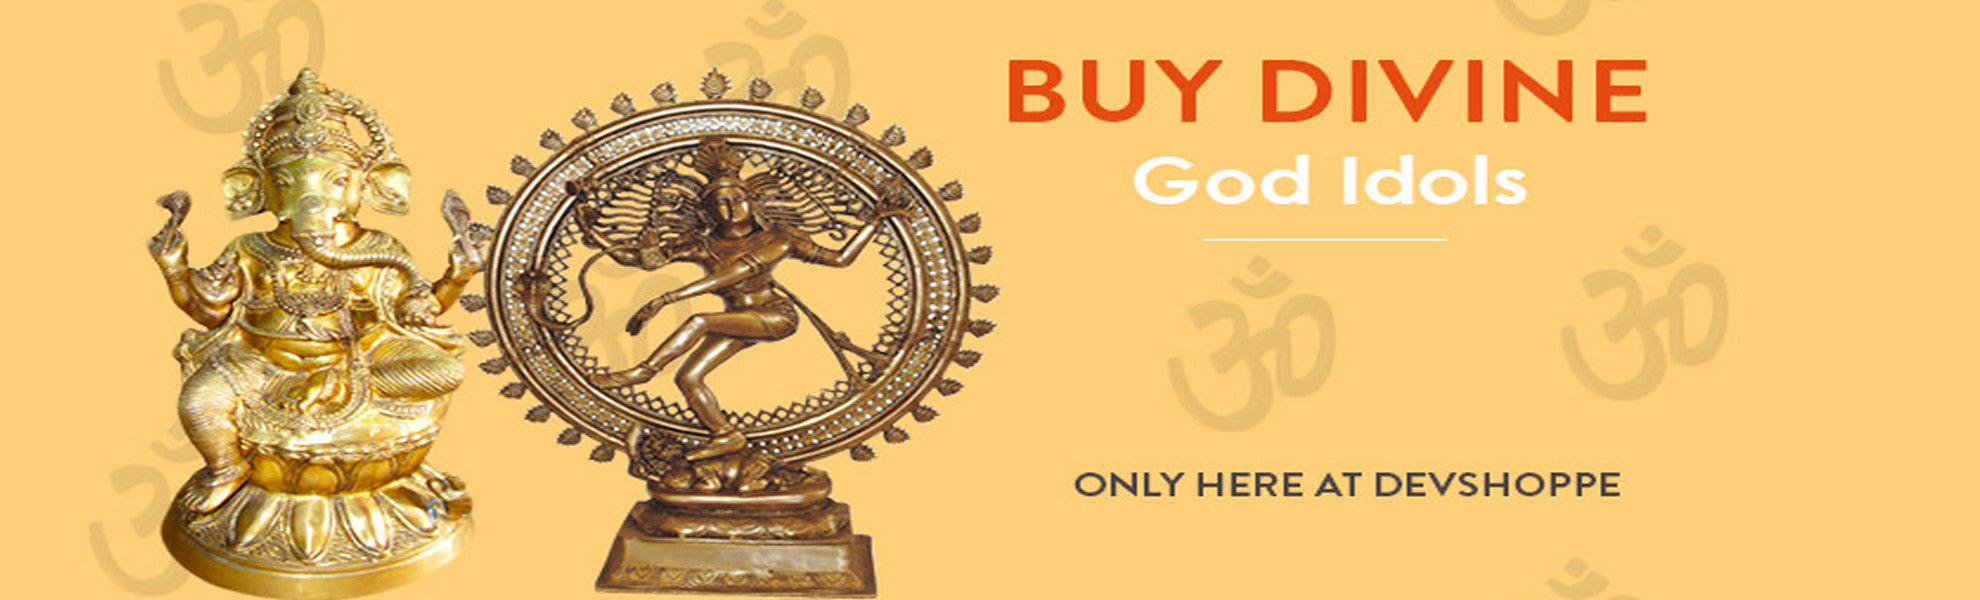 Buy Divine god idols at www.devshoppe.com